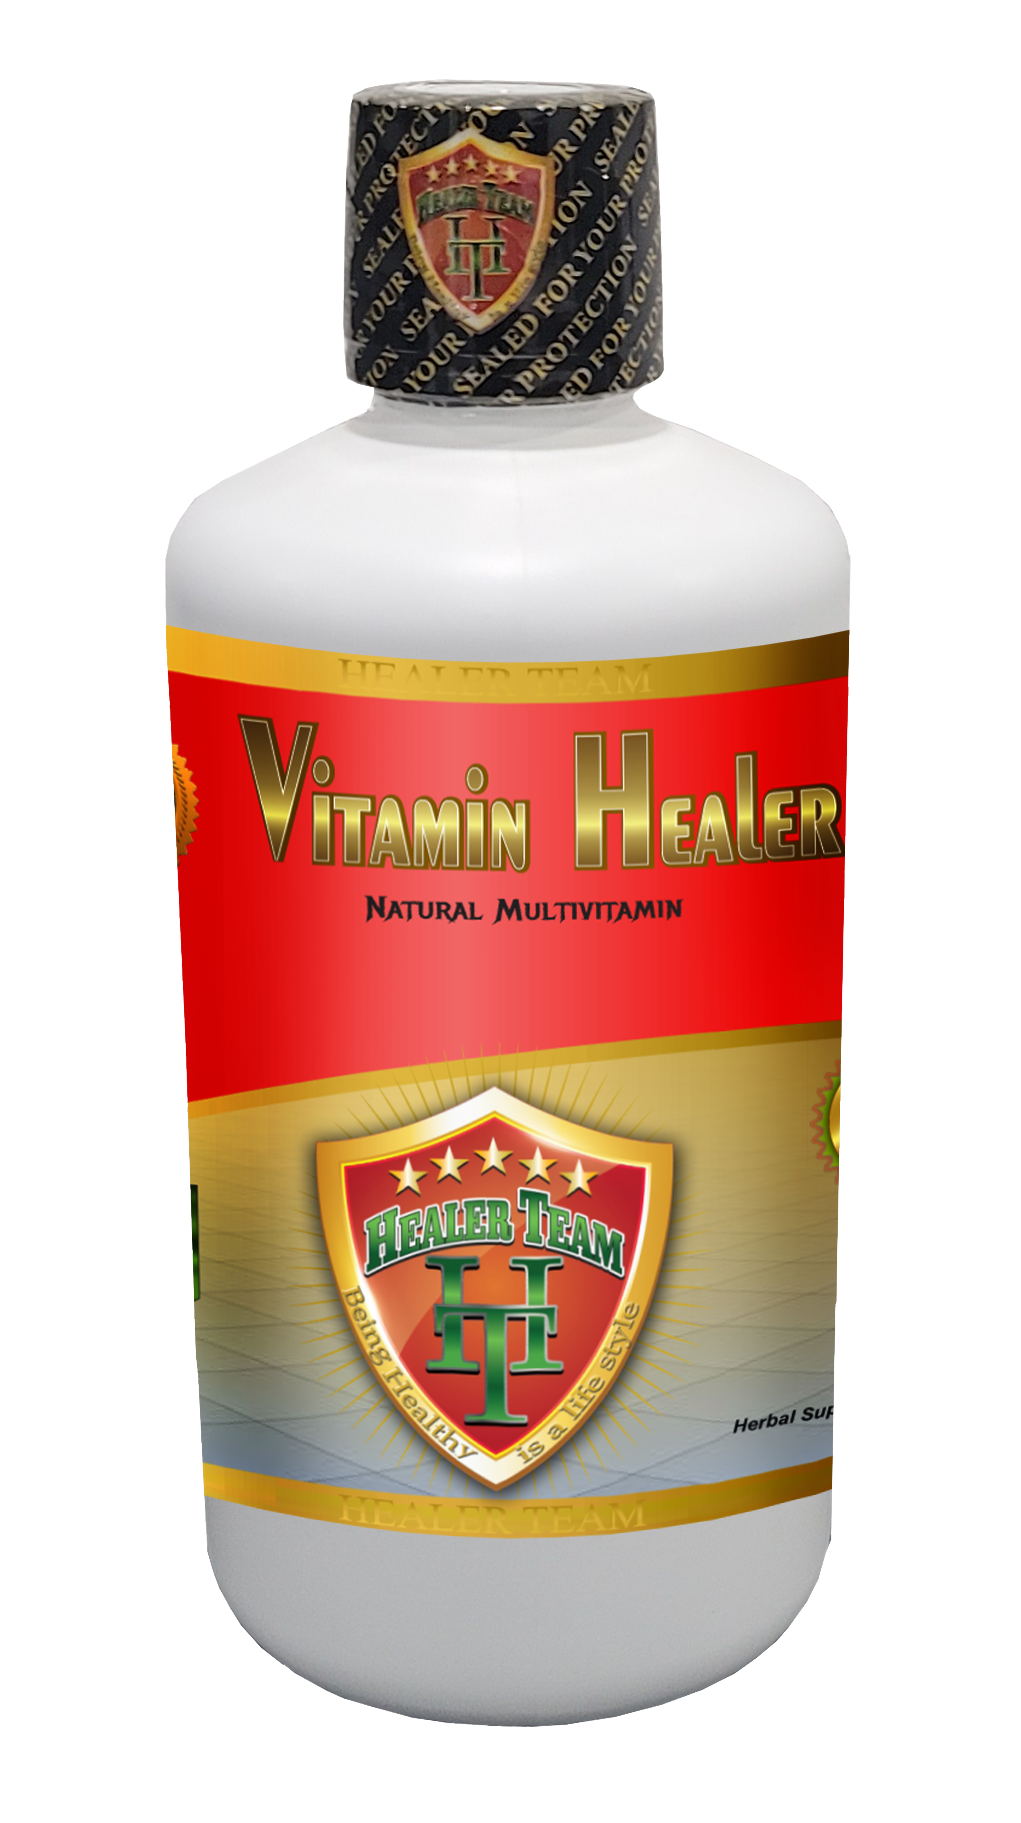 Vitamin Healer